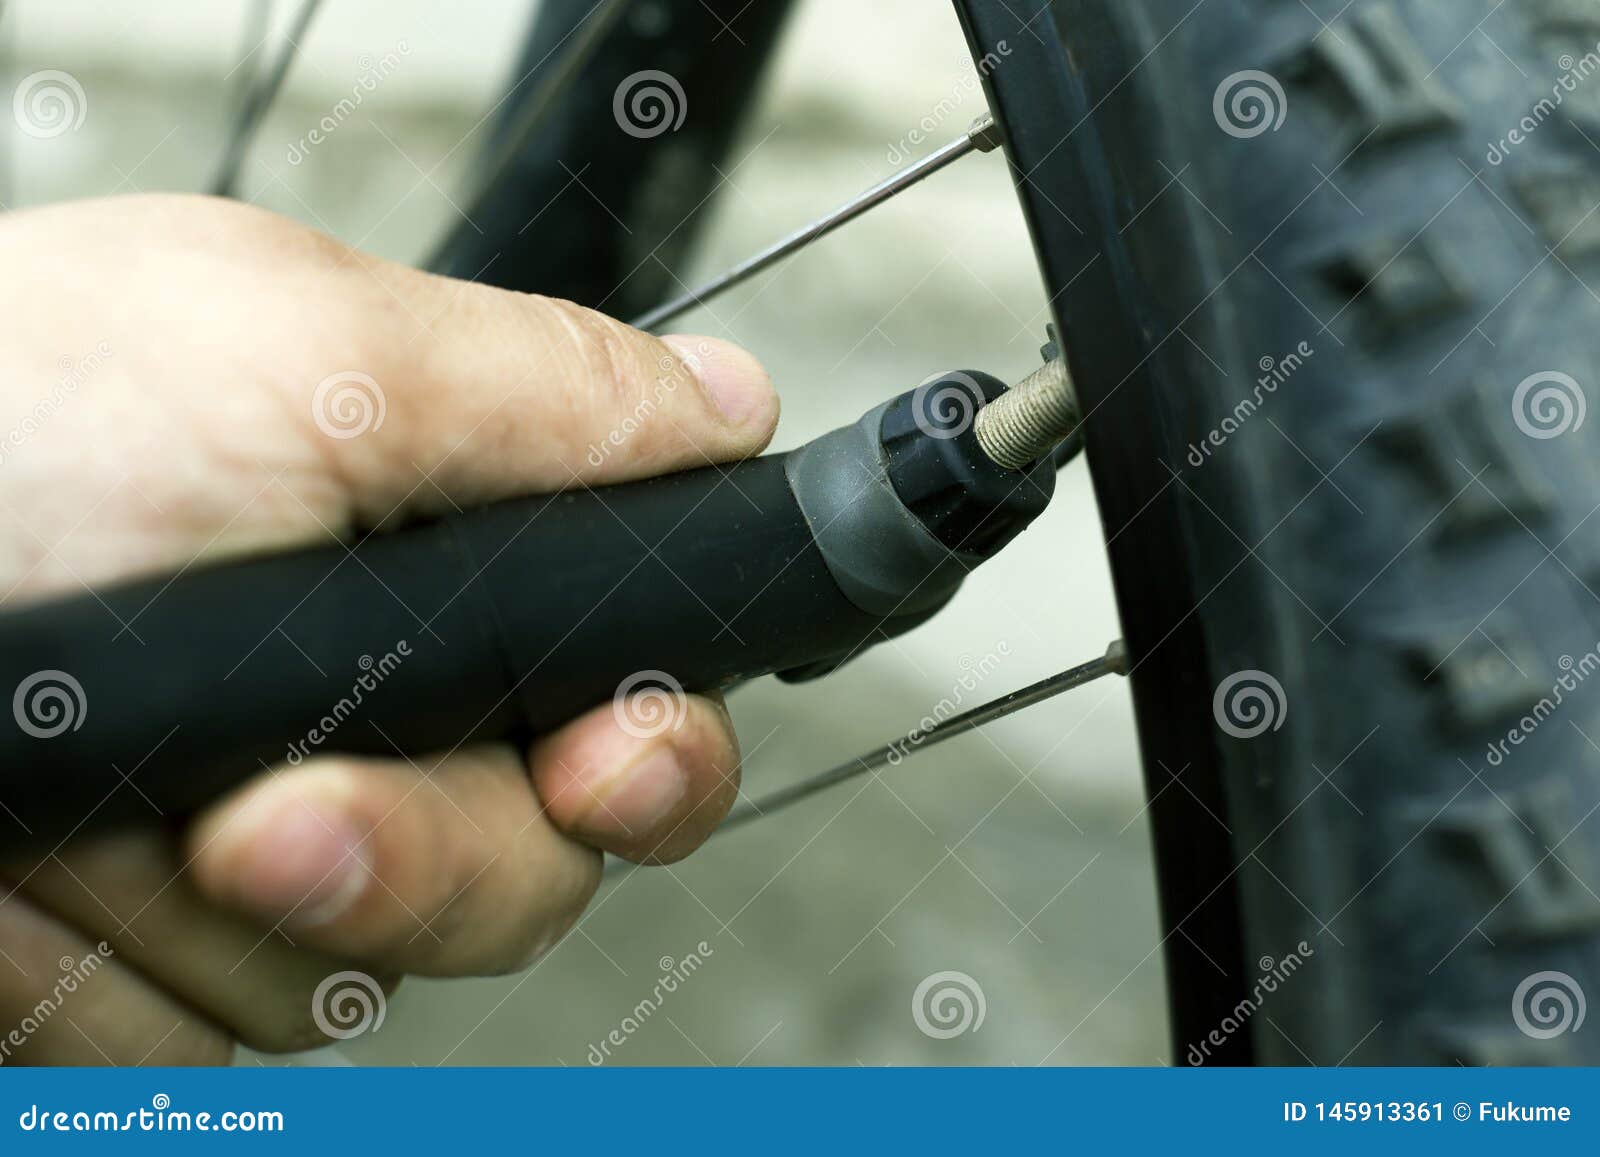 Сдувается колесо велосипеда. Спущенное колесо велосипеда. Сдуваются велосипедные трубки. Постоянно сдувается колесо на велосипеде. Спущенное колесо велосипеда фото.